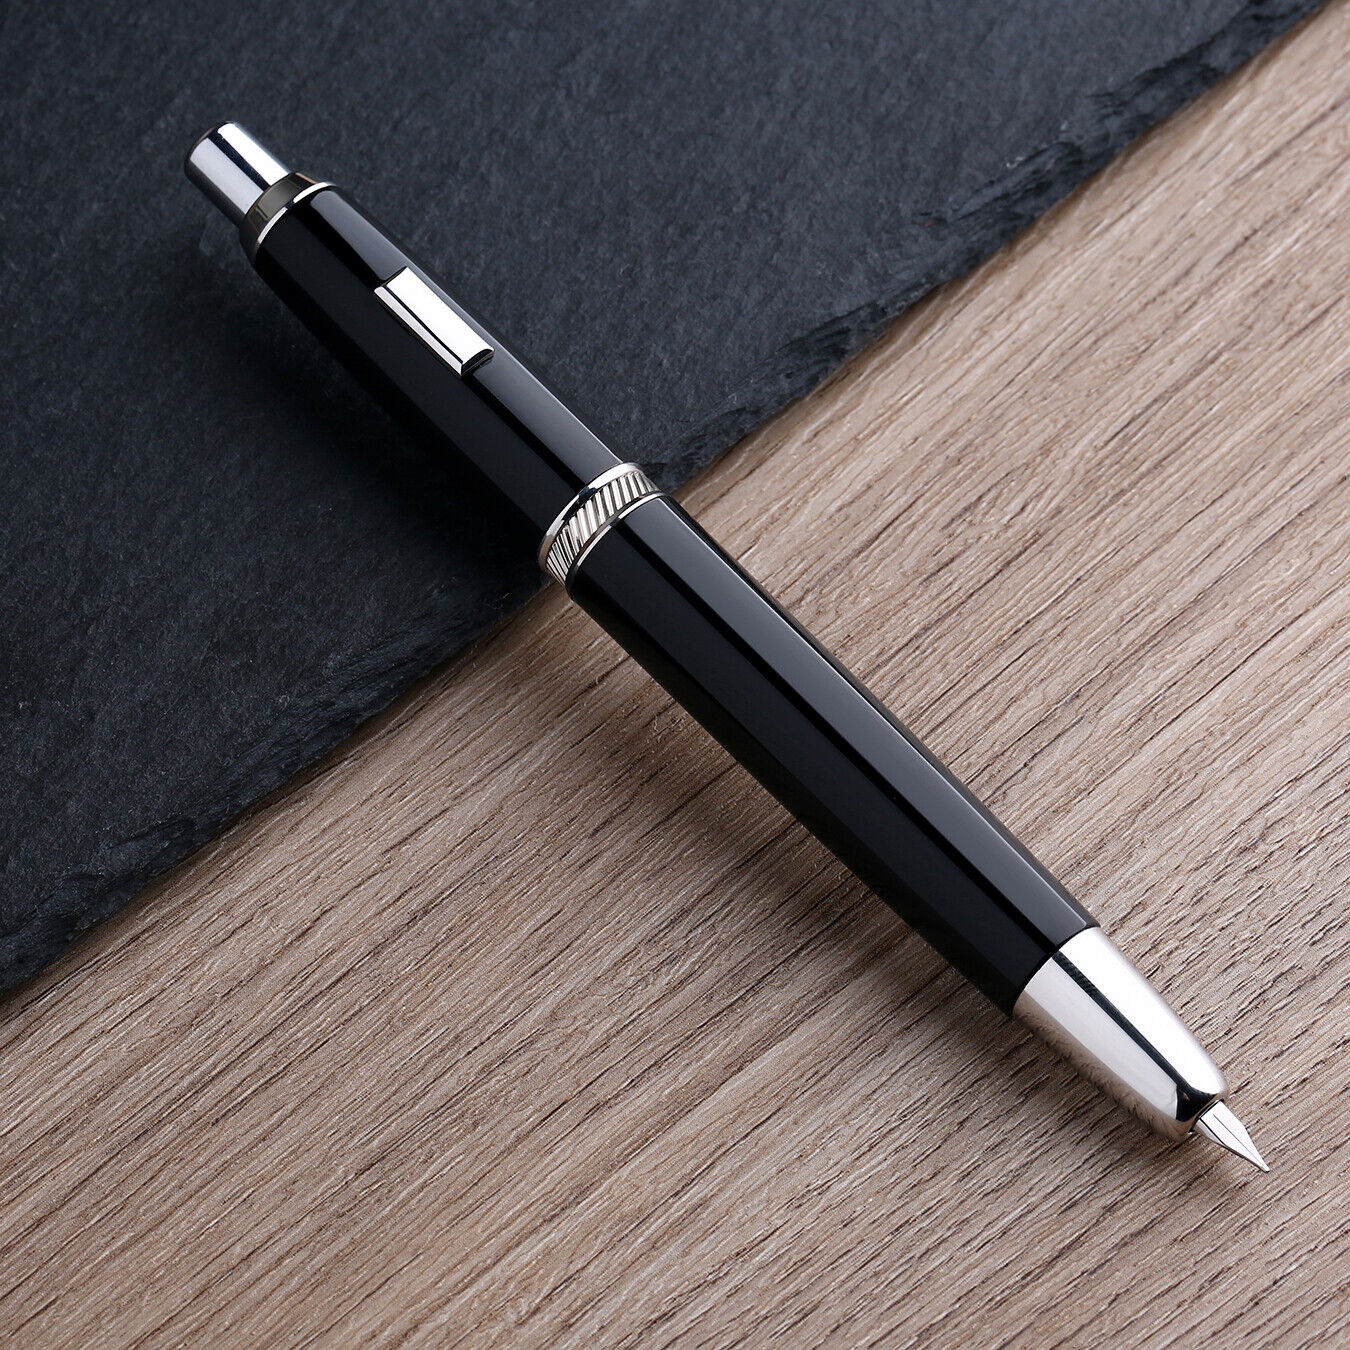 MAJOHN A1 Press Fountain Pen Retractable EF Metal No Clip Version Bright Black